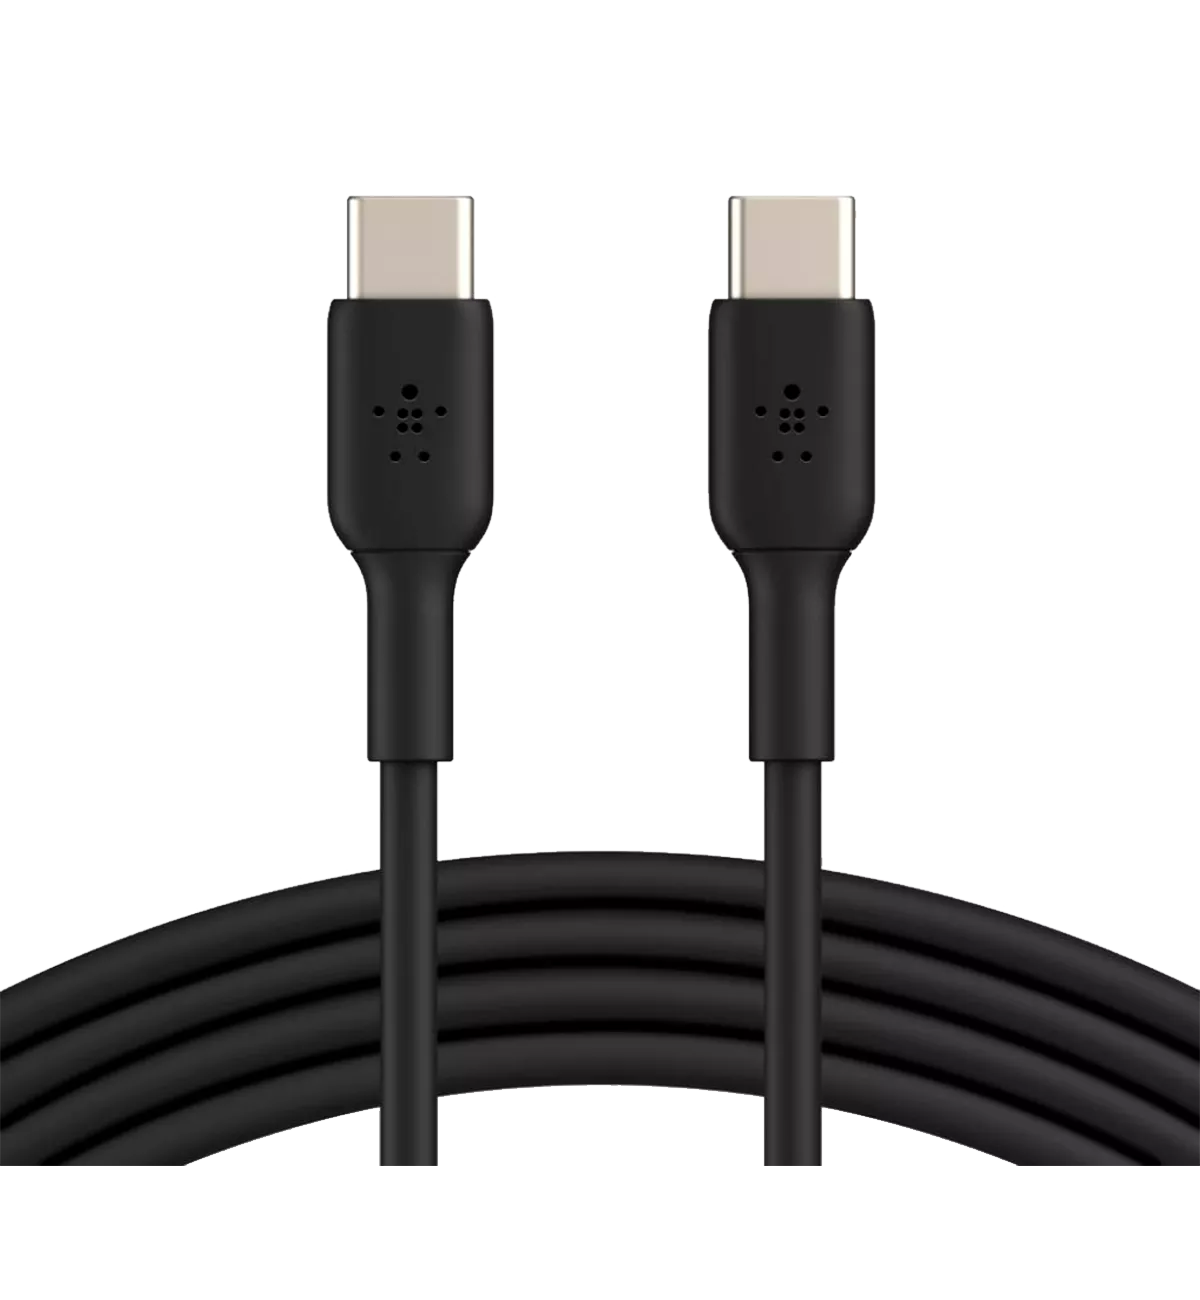 Дата кабель Belkin USB-C - USB-C, PVC, 2m, black (CAB003BT2MBK)